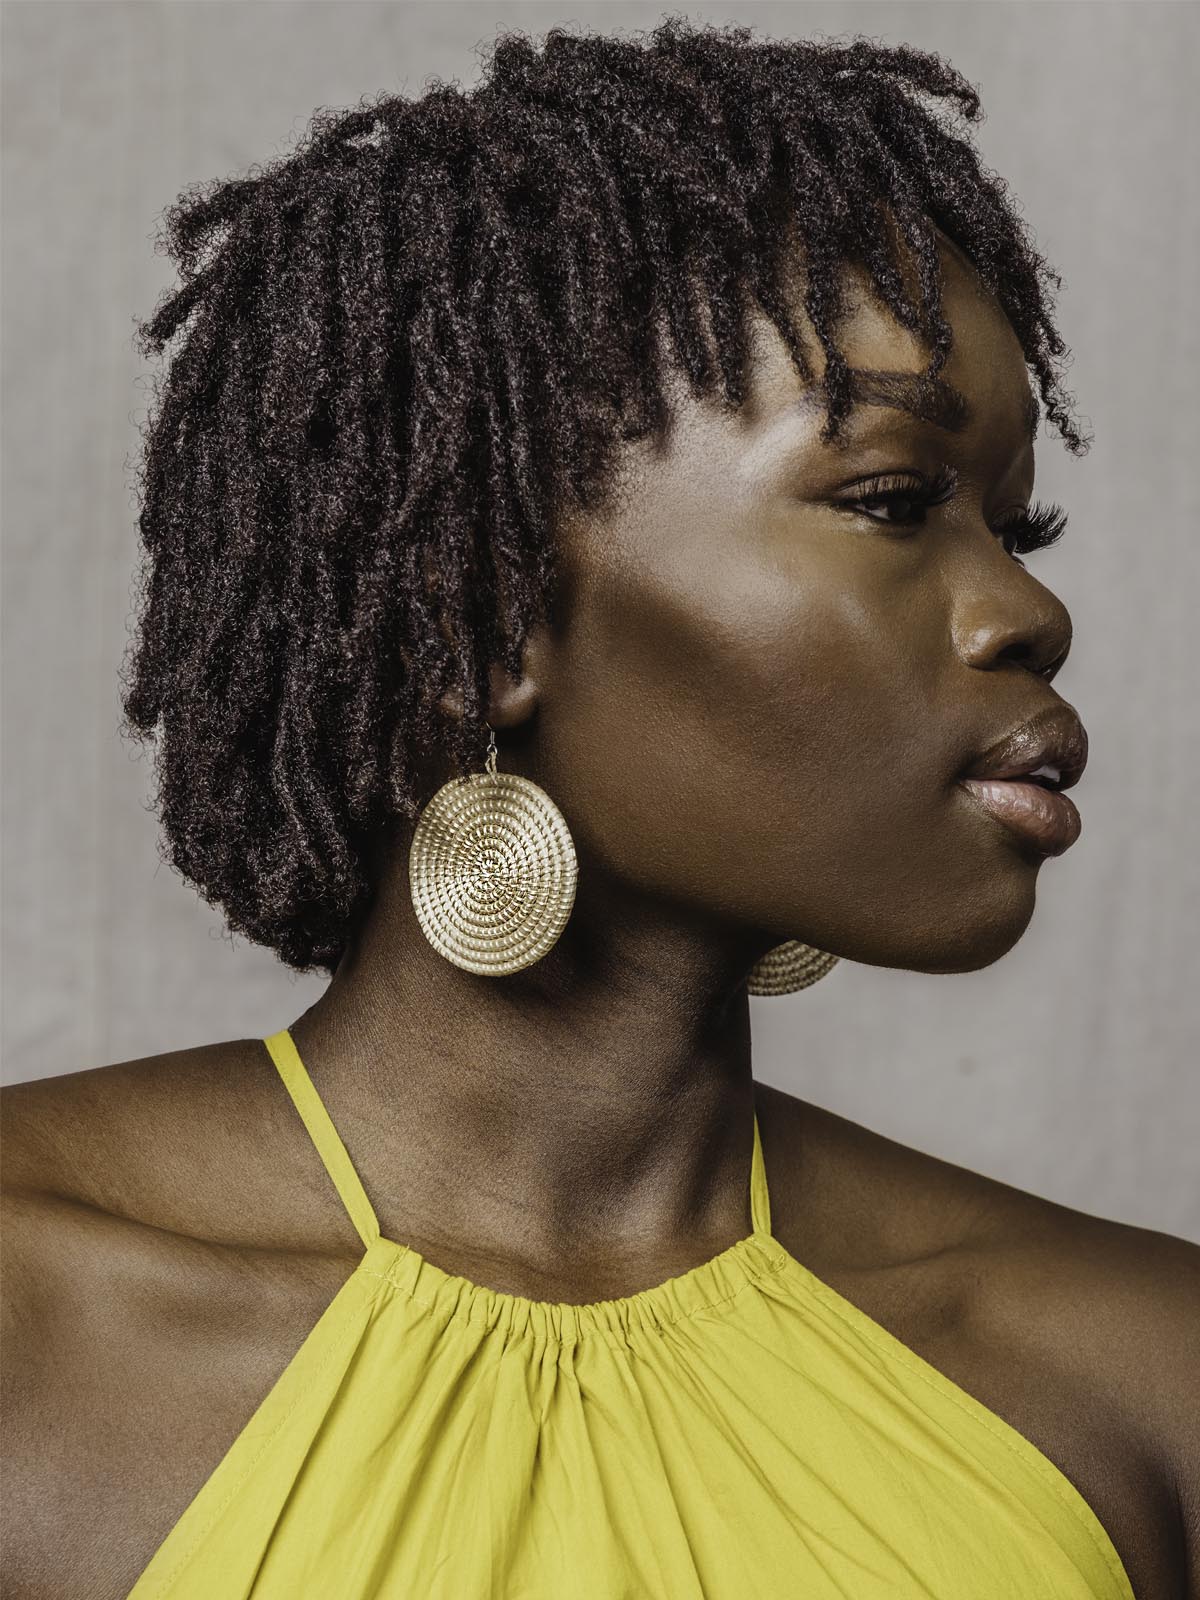 Tan circle earrings on a female wearing a yellow top. 